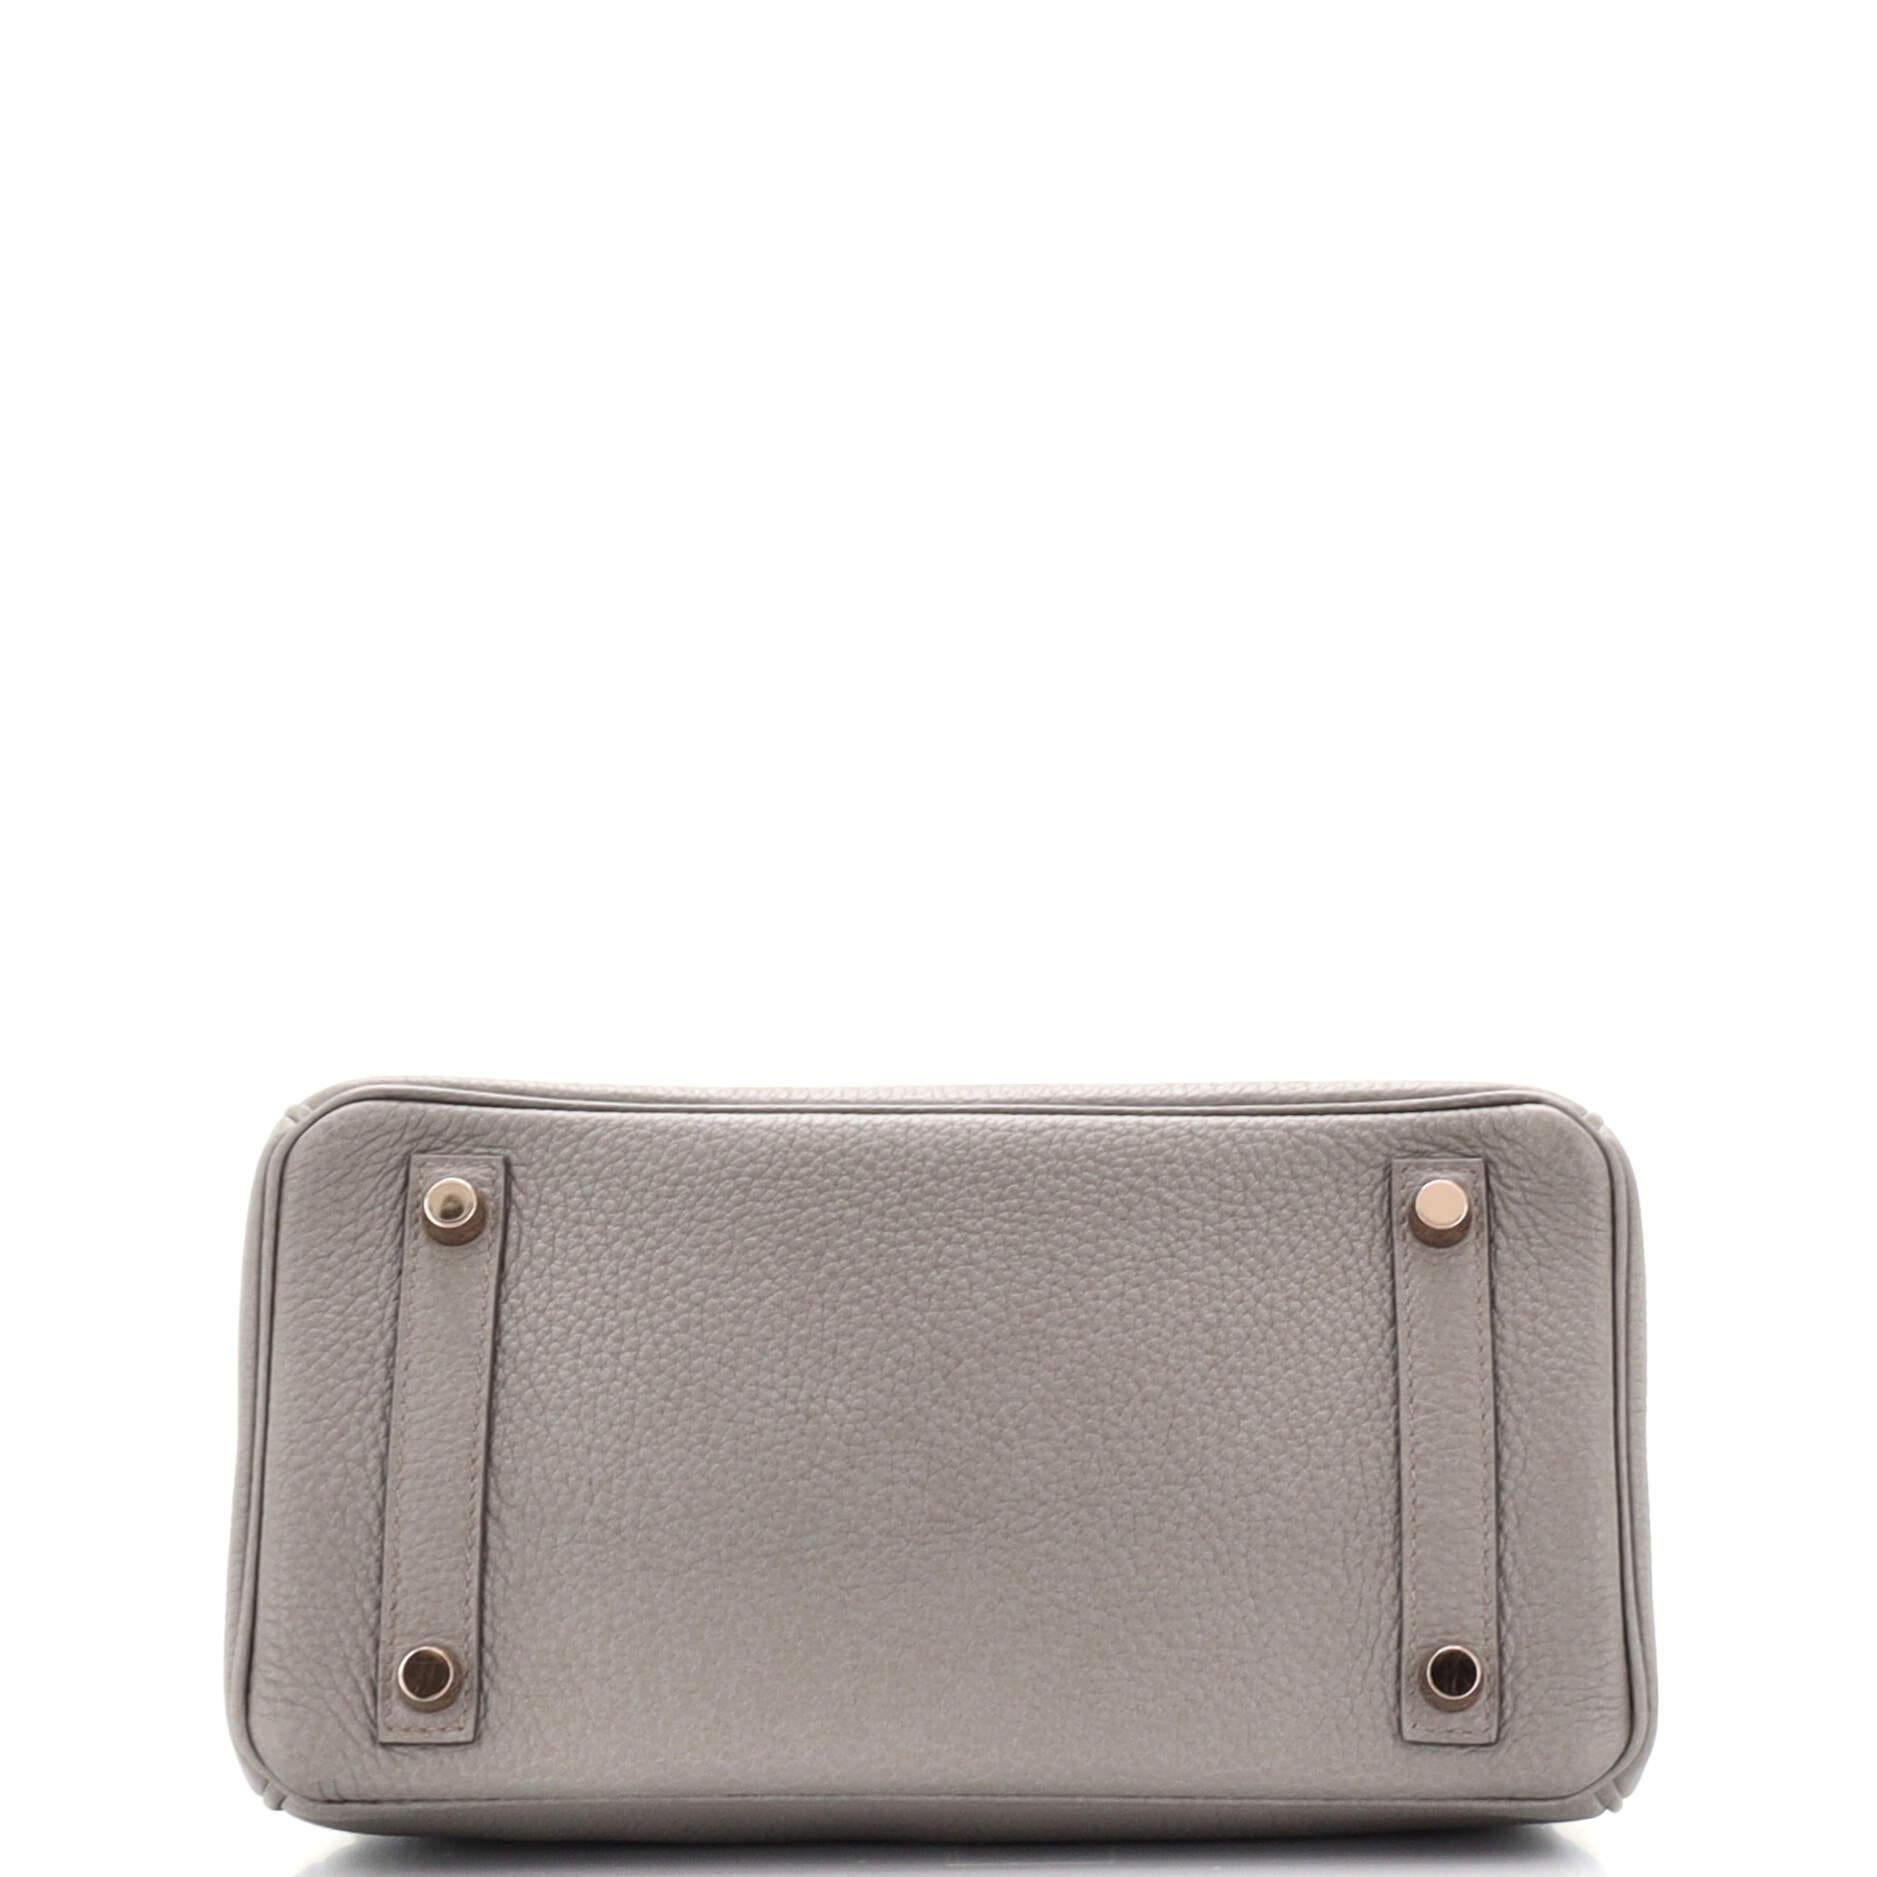 Gray Hermes Birkin Handbag Etain Togo with Rose Gold Hardware 25